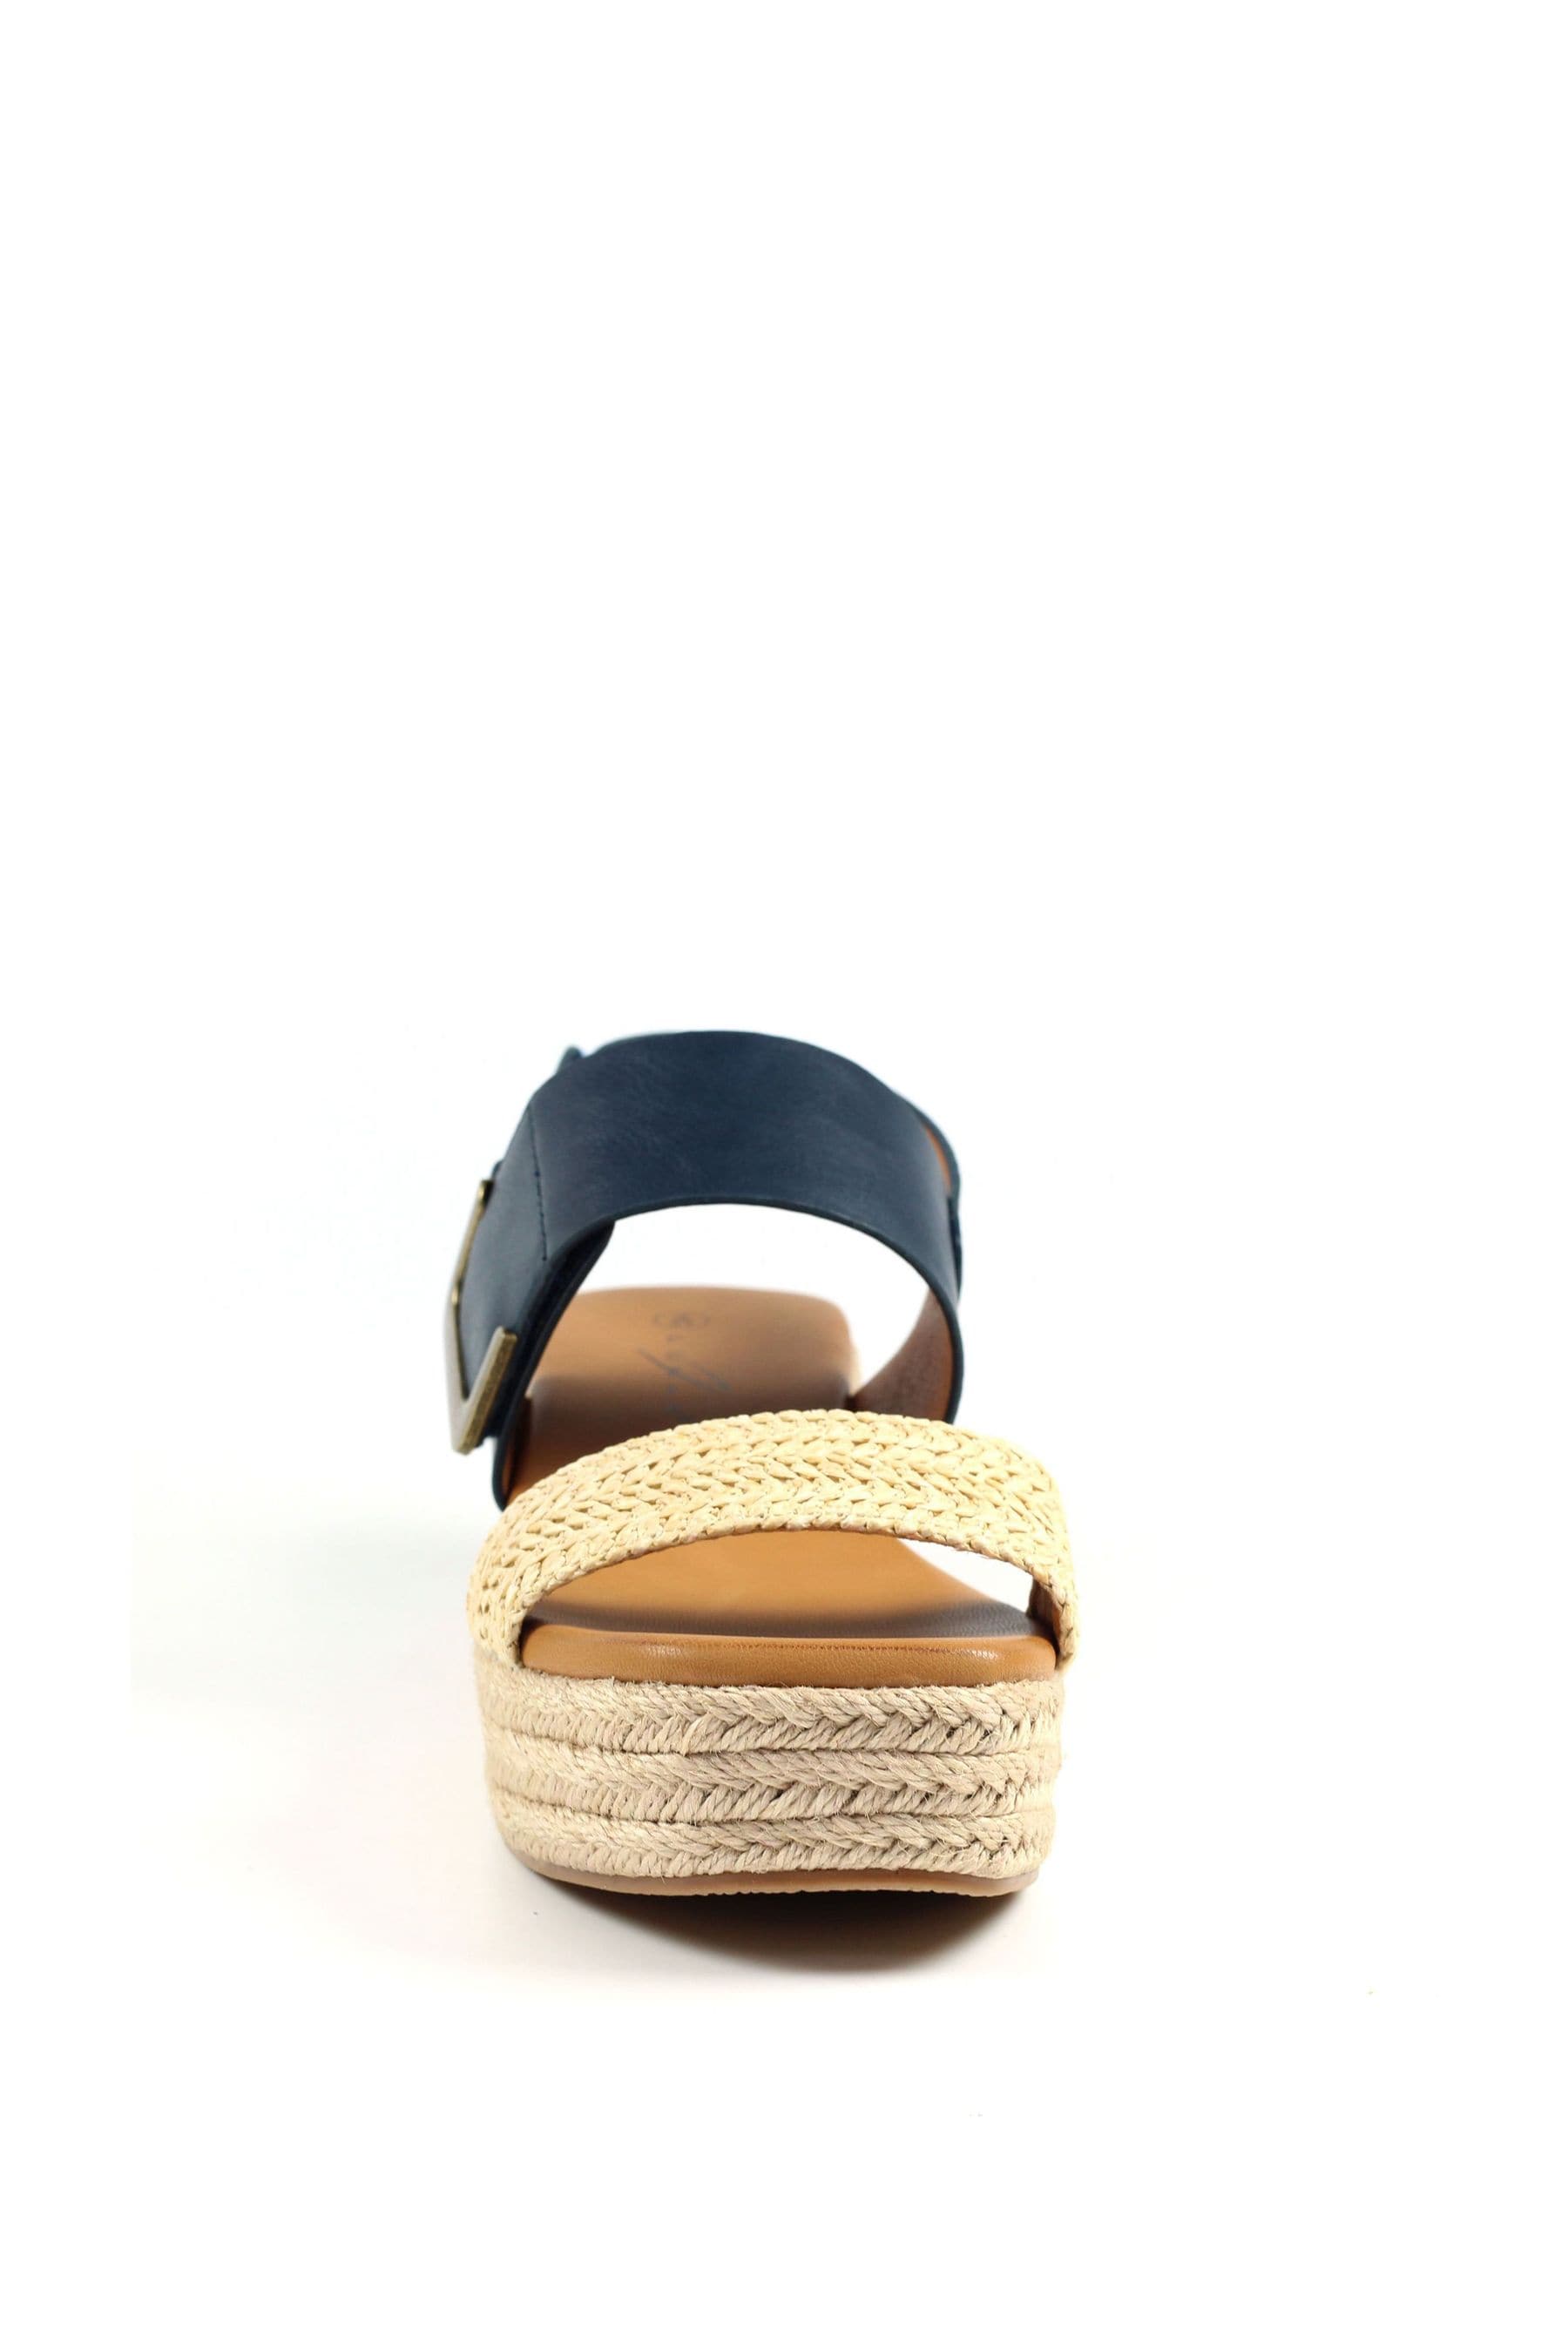 Buy Lunar Logan Sandals from the Next UK online shop